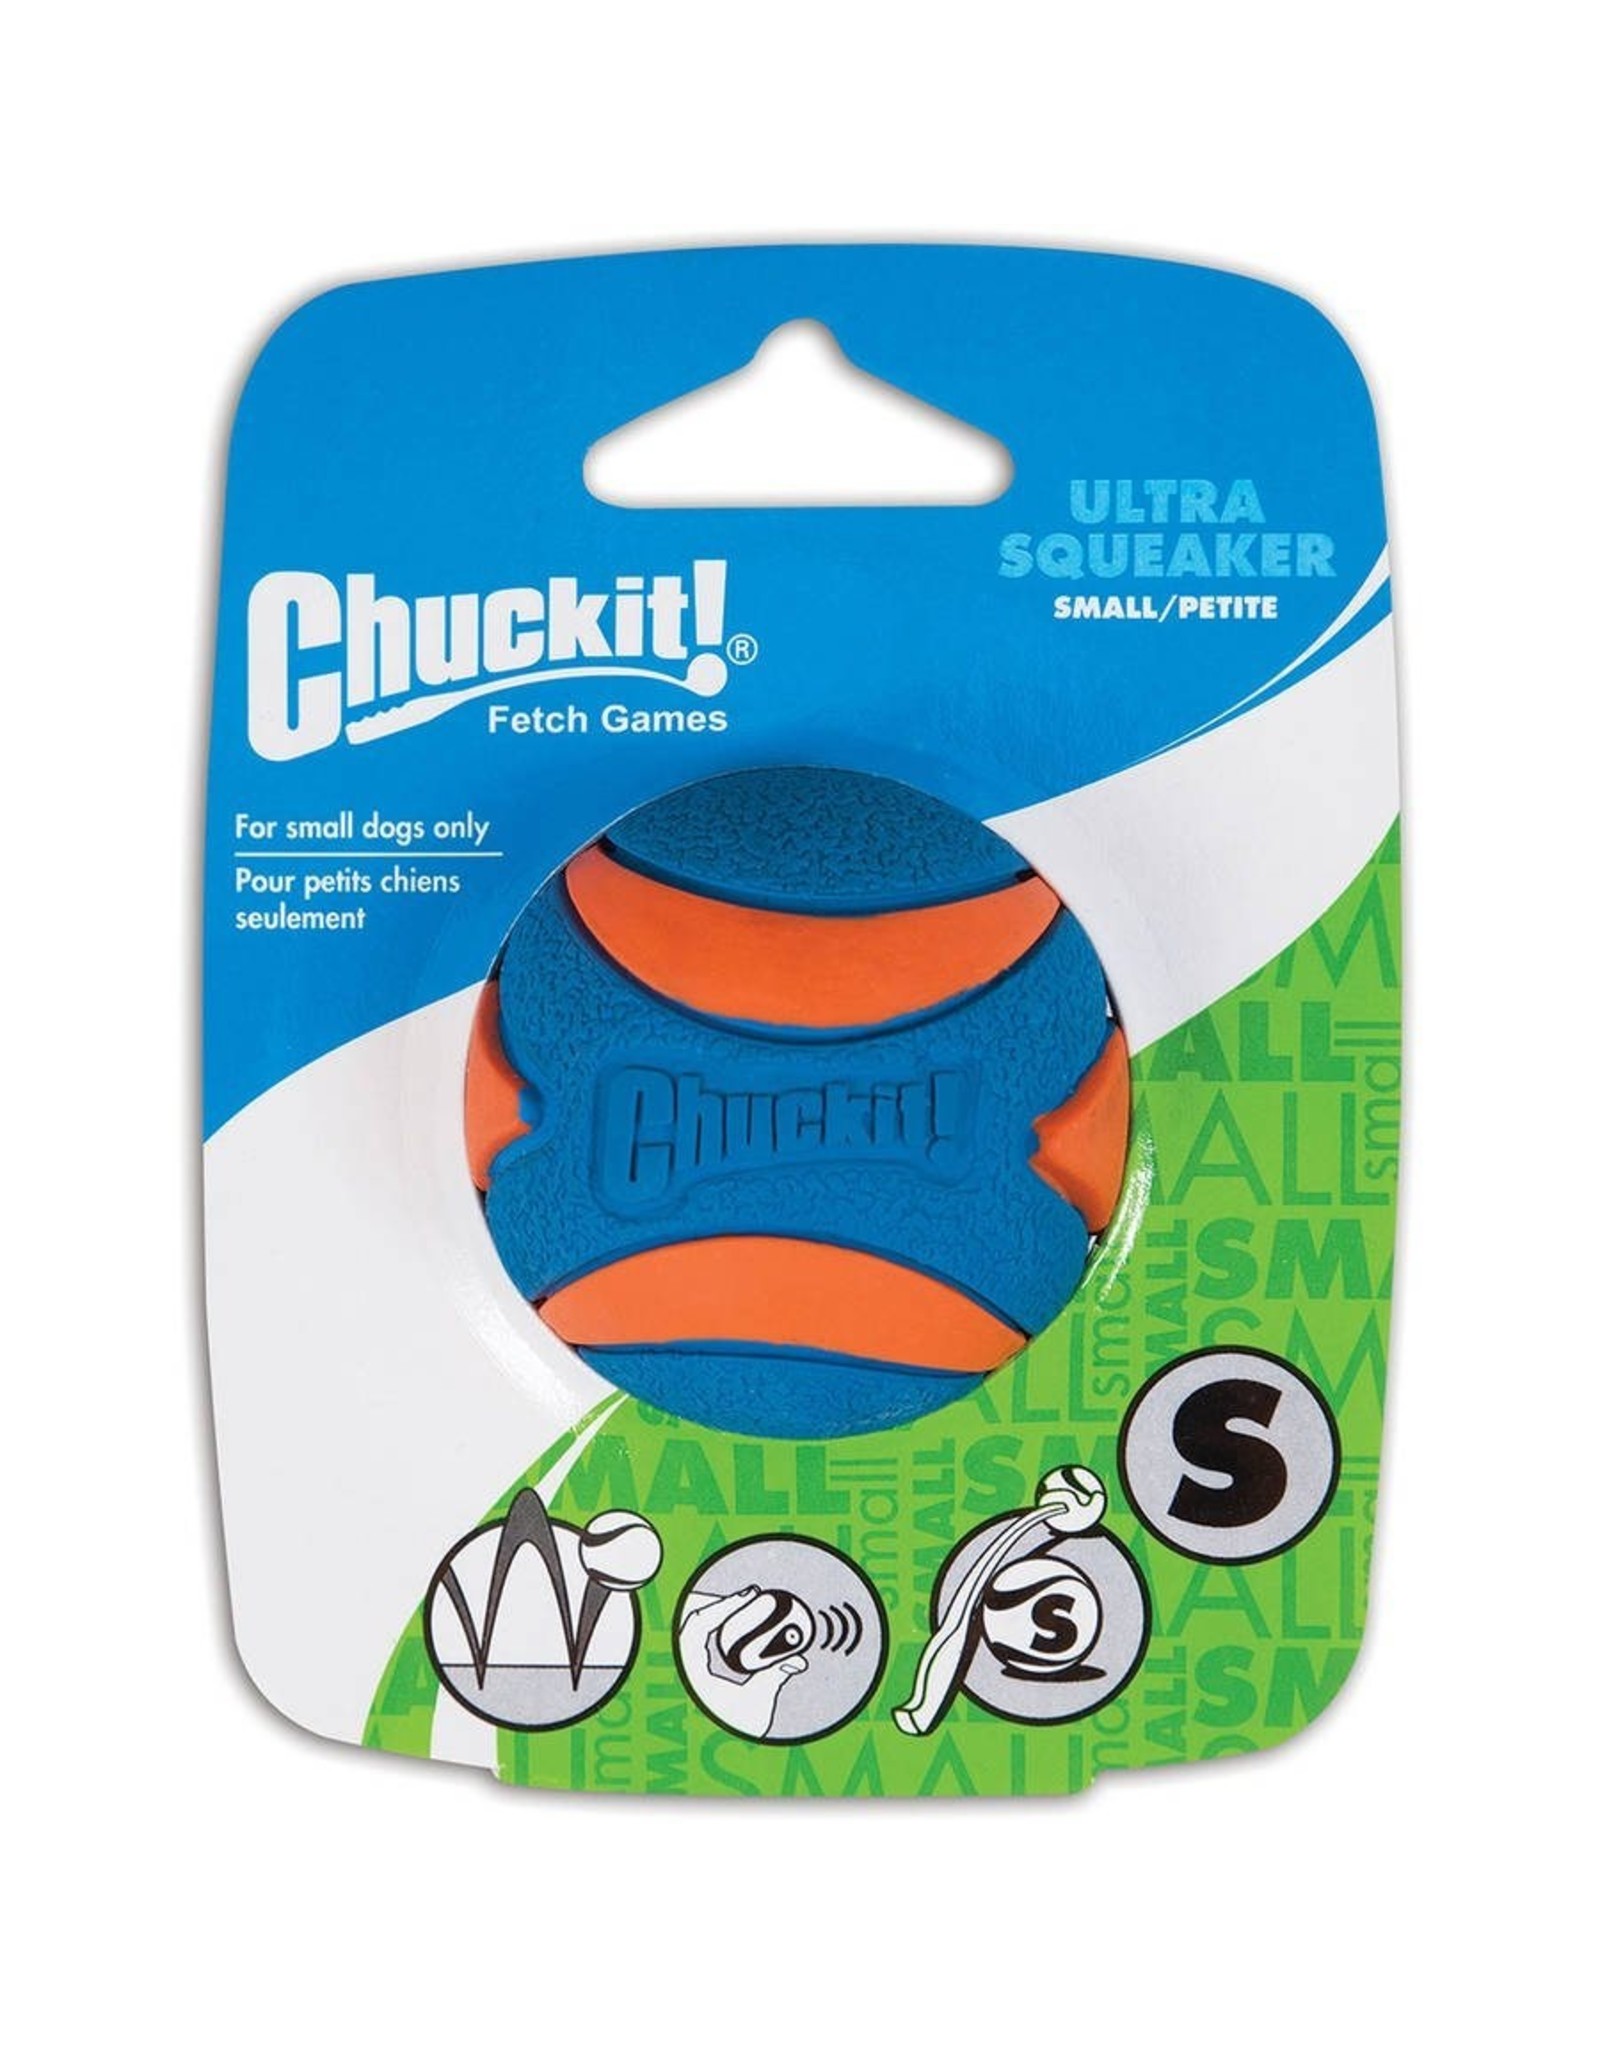 Chuckit! Ultra Squeaker Balls 1-Pack Small